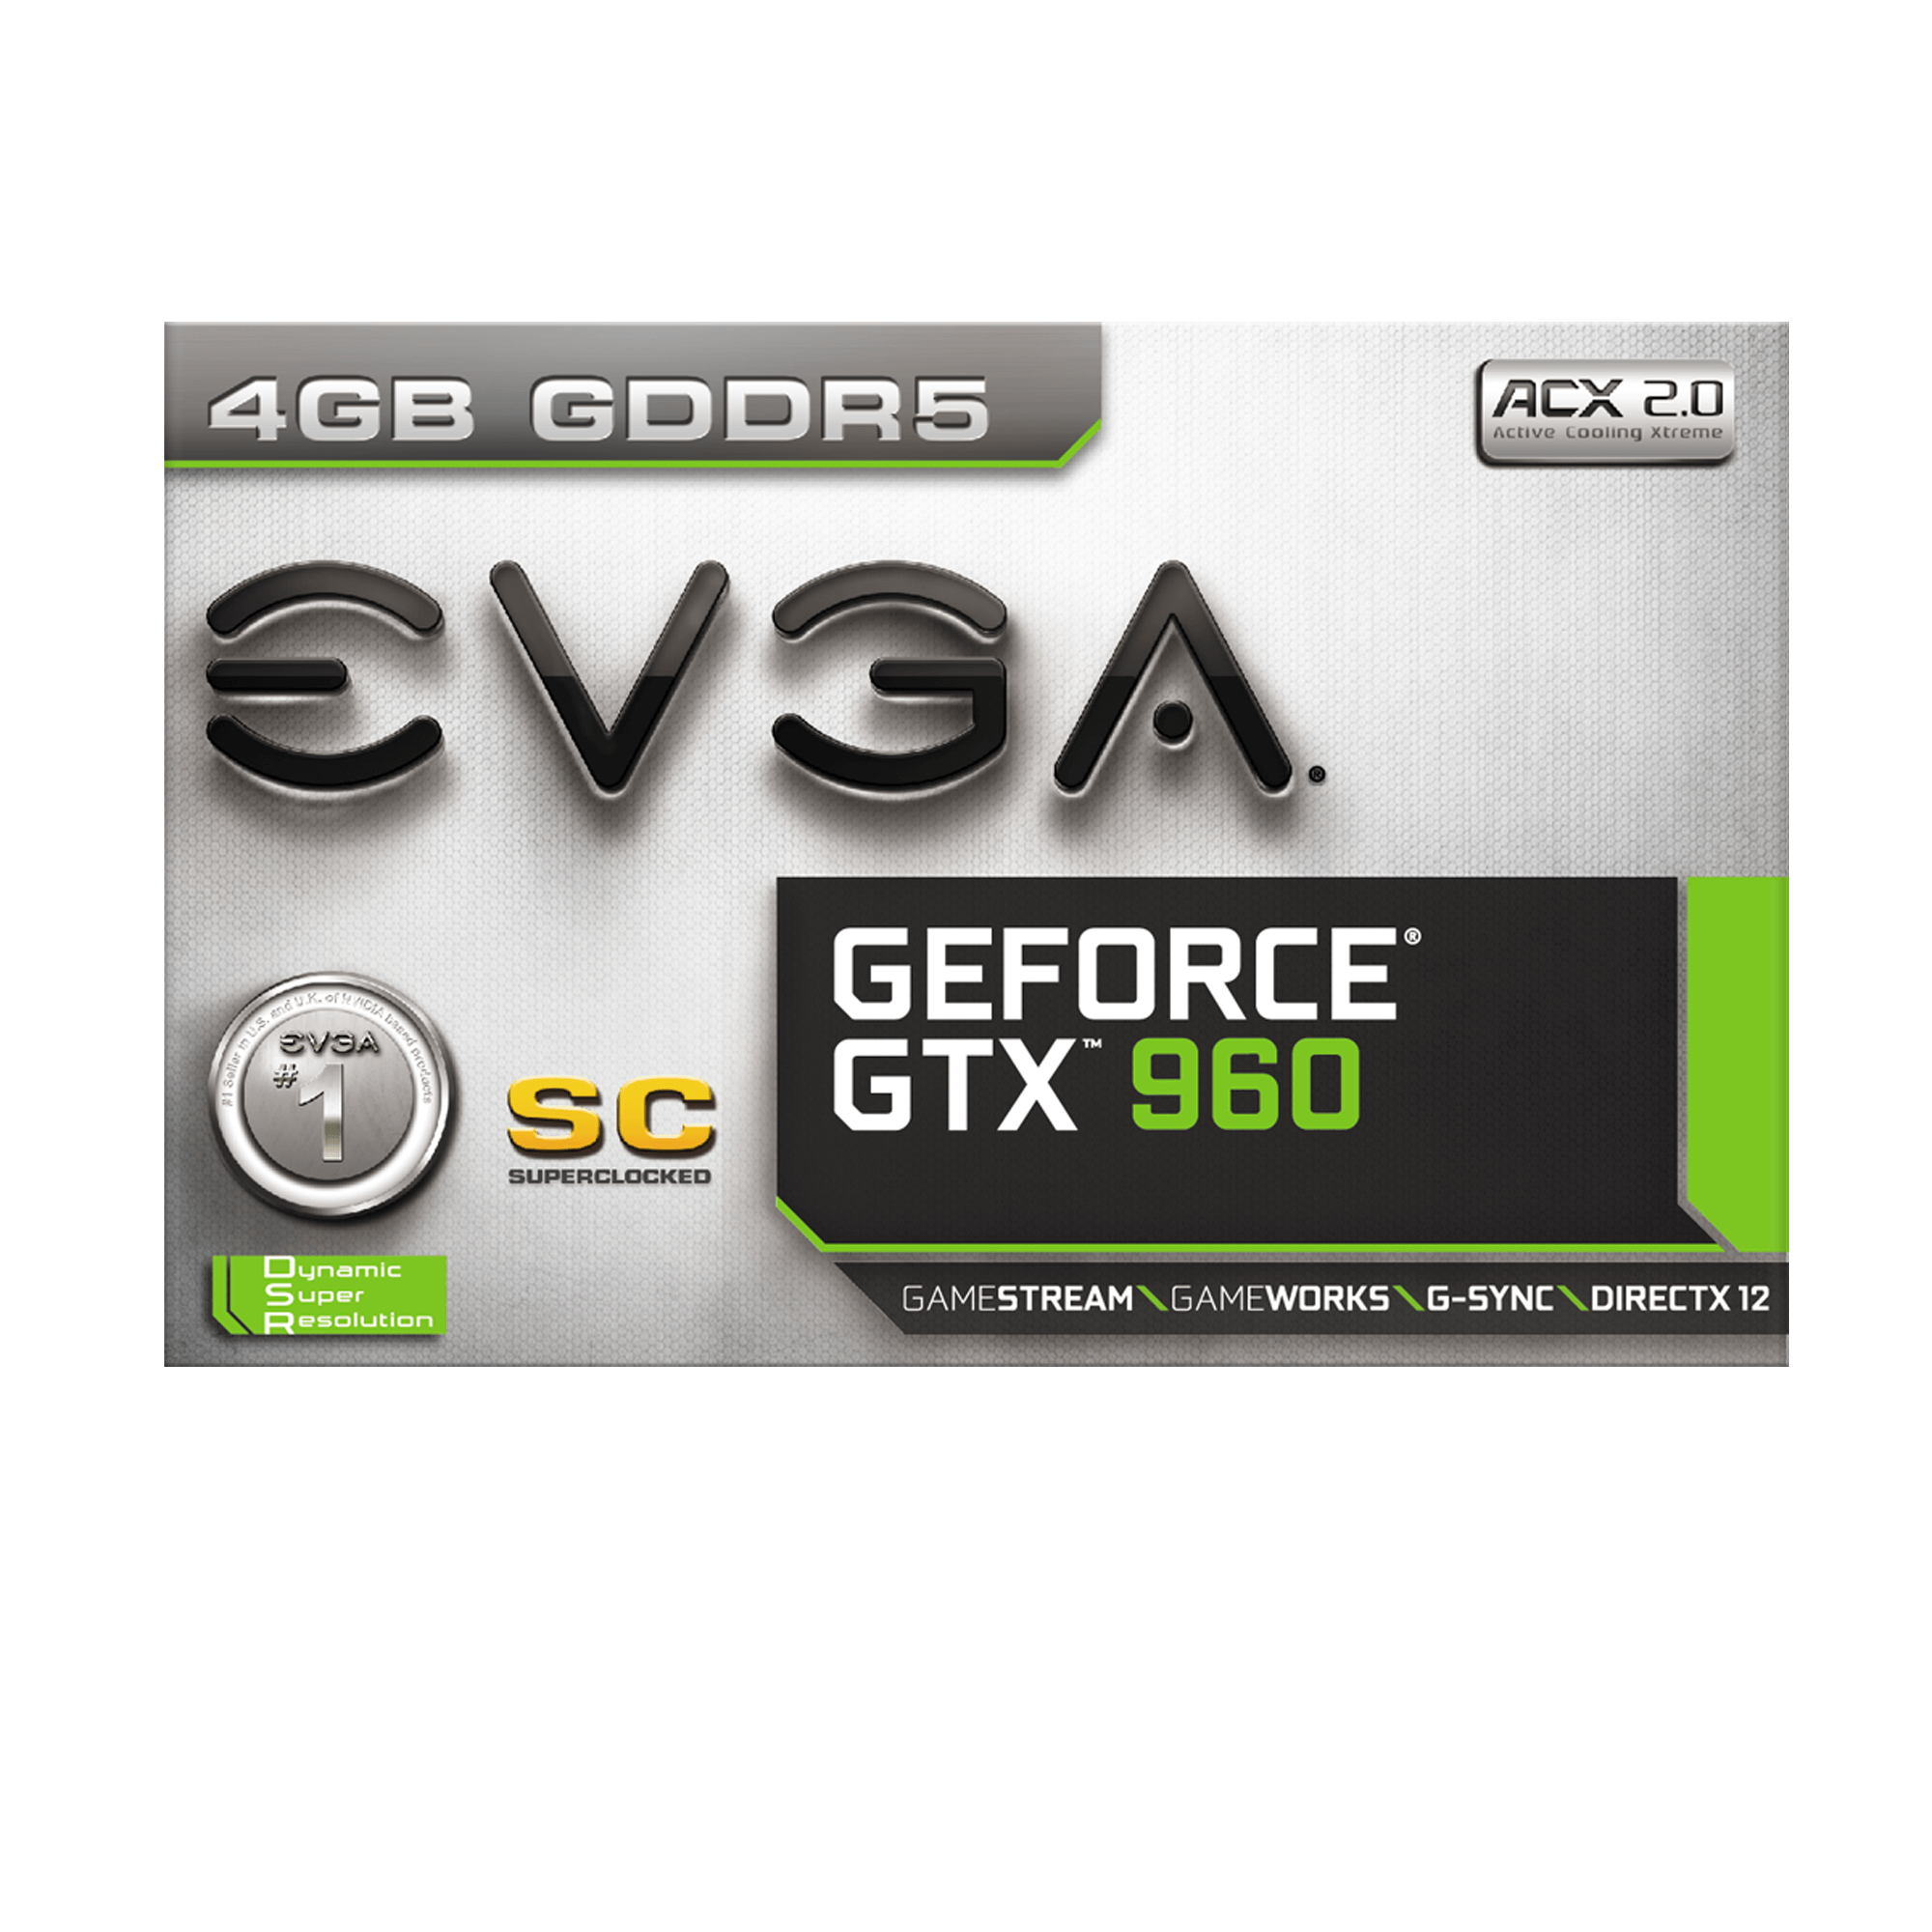 EVGA - Asia - Products - EVGA GeForce GTX 960 4GB SC GAMING - 04G 